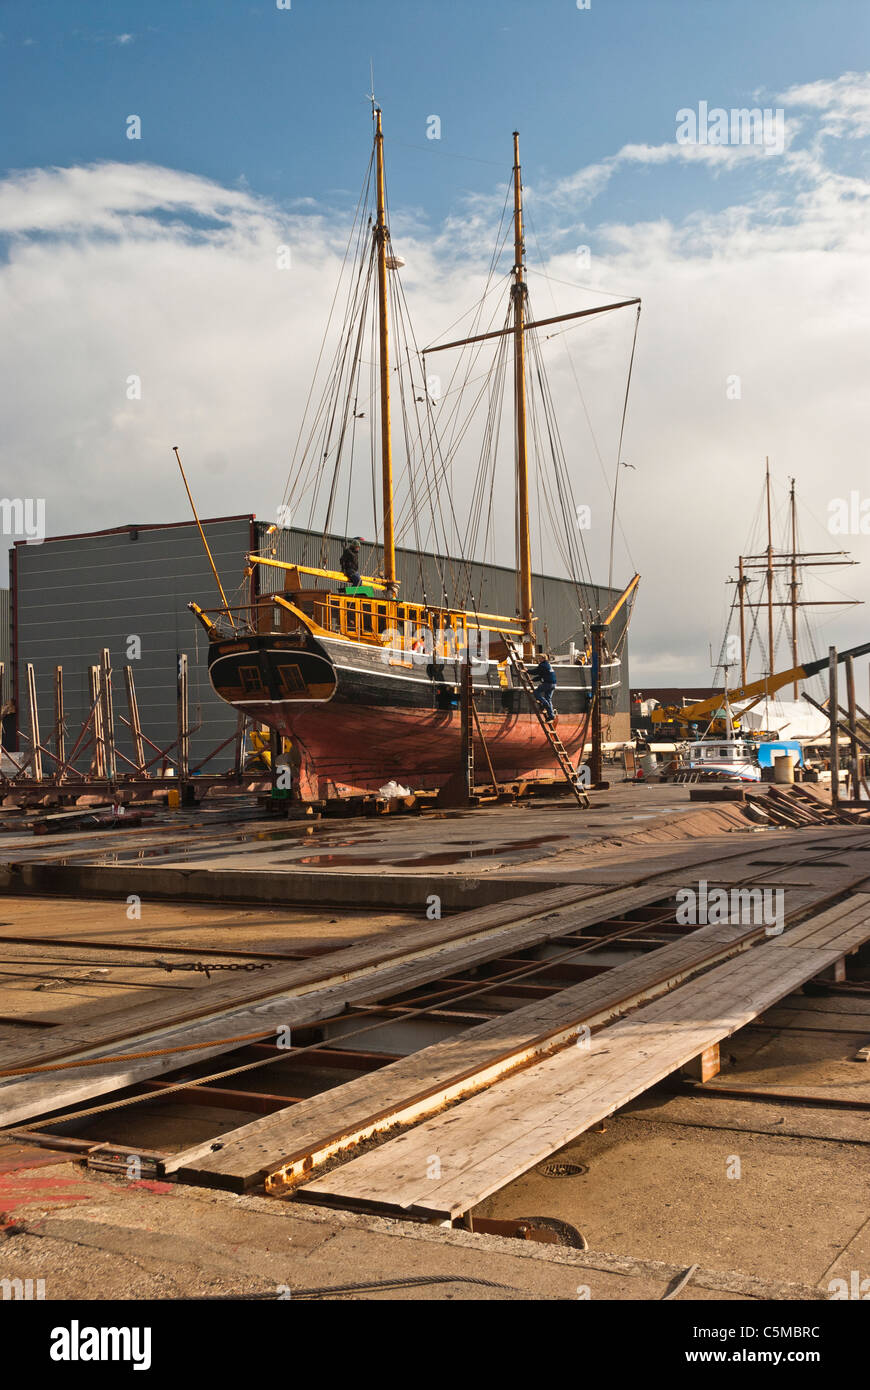 Old sailing ships are in dry dock, Port of Hvide Sande, Jutland, Denmark Stock Photo